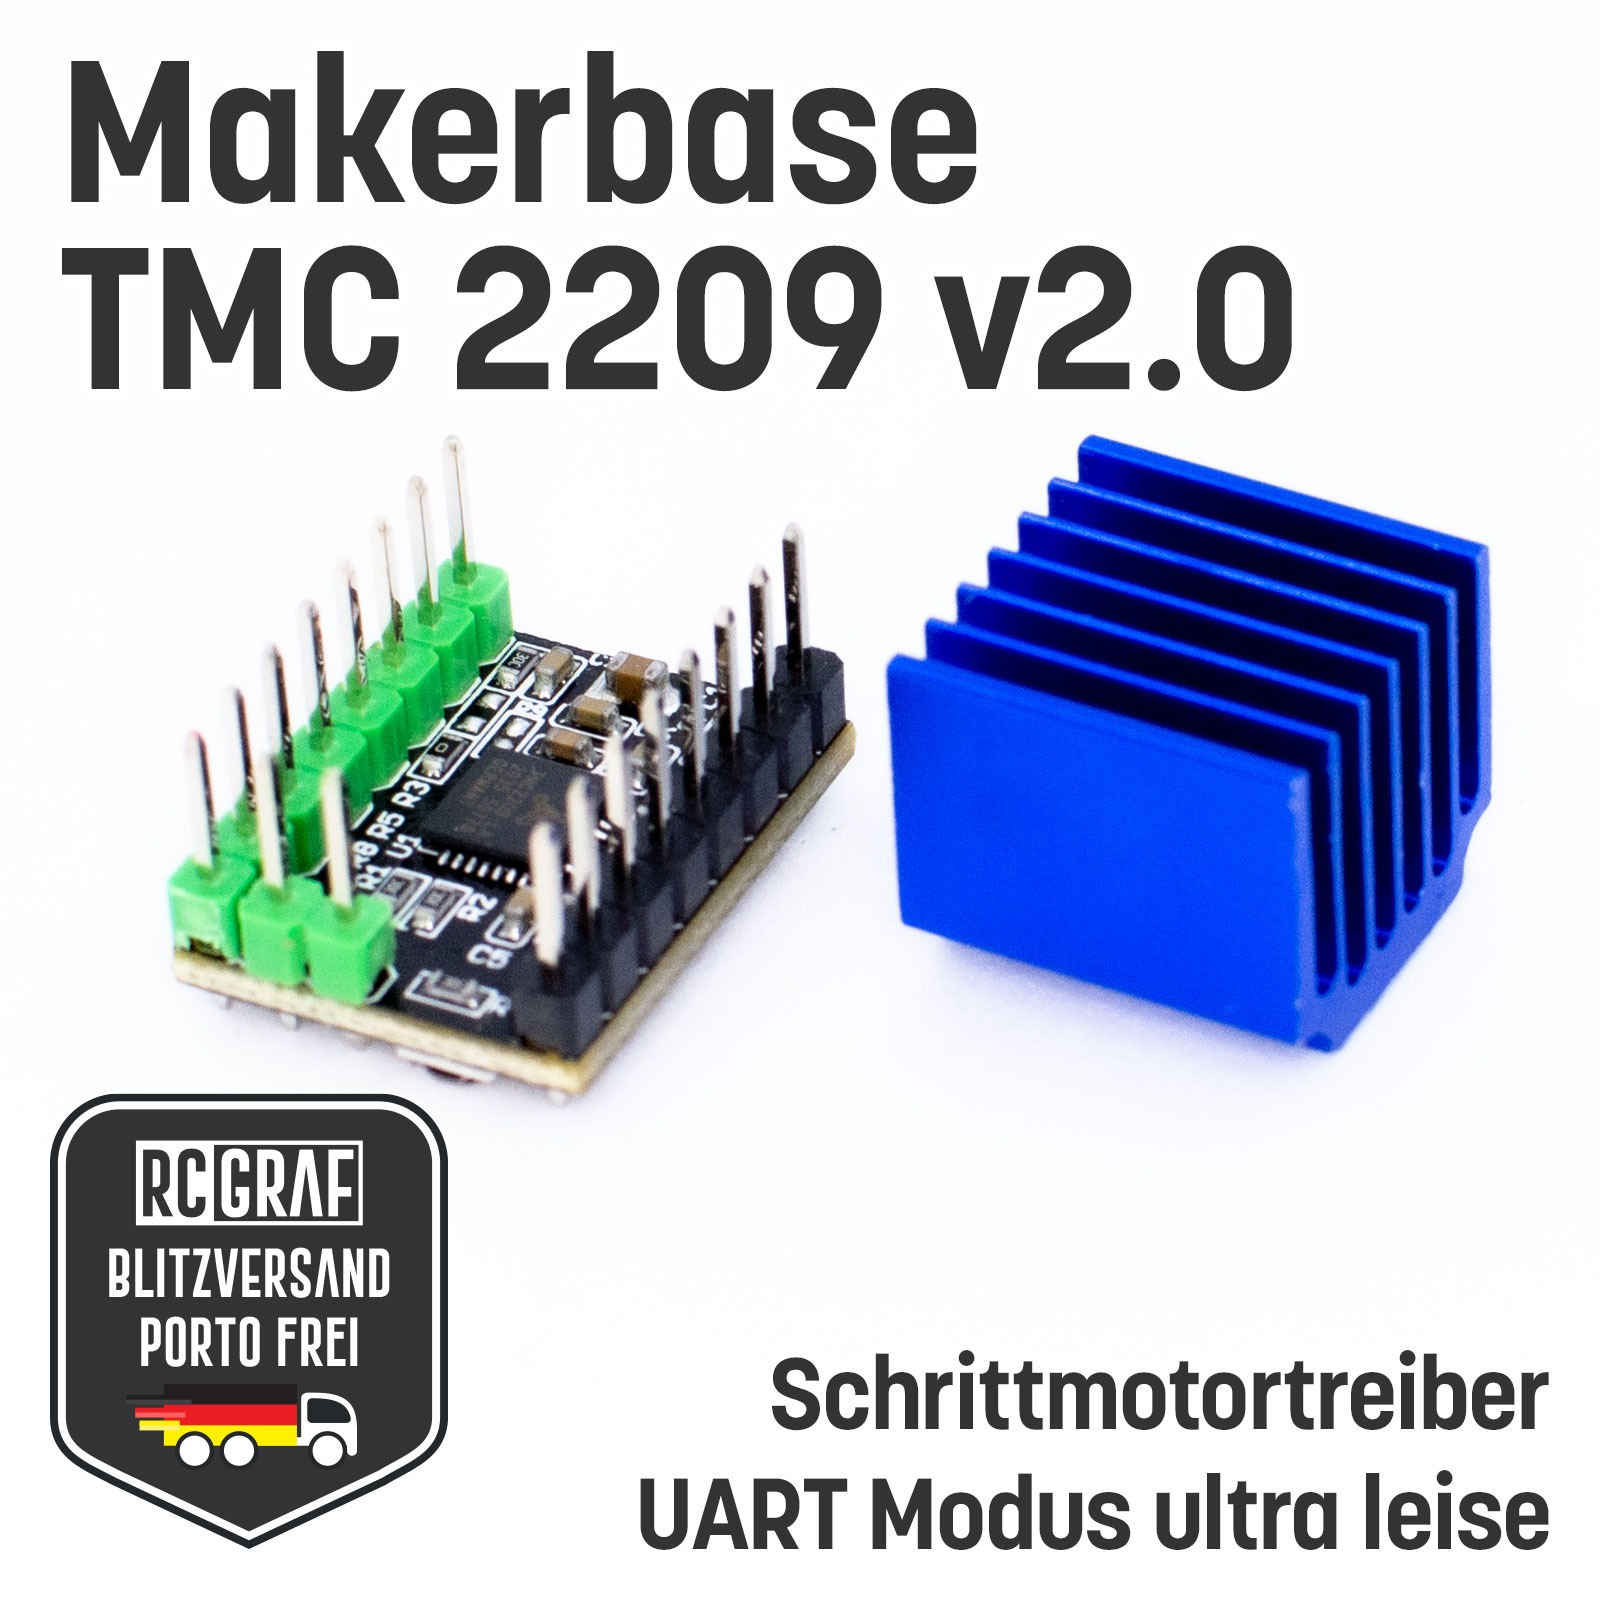 Makerbase TMC2209 V2.0 Schrittmotortreiber UART Modus ultra leise